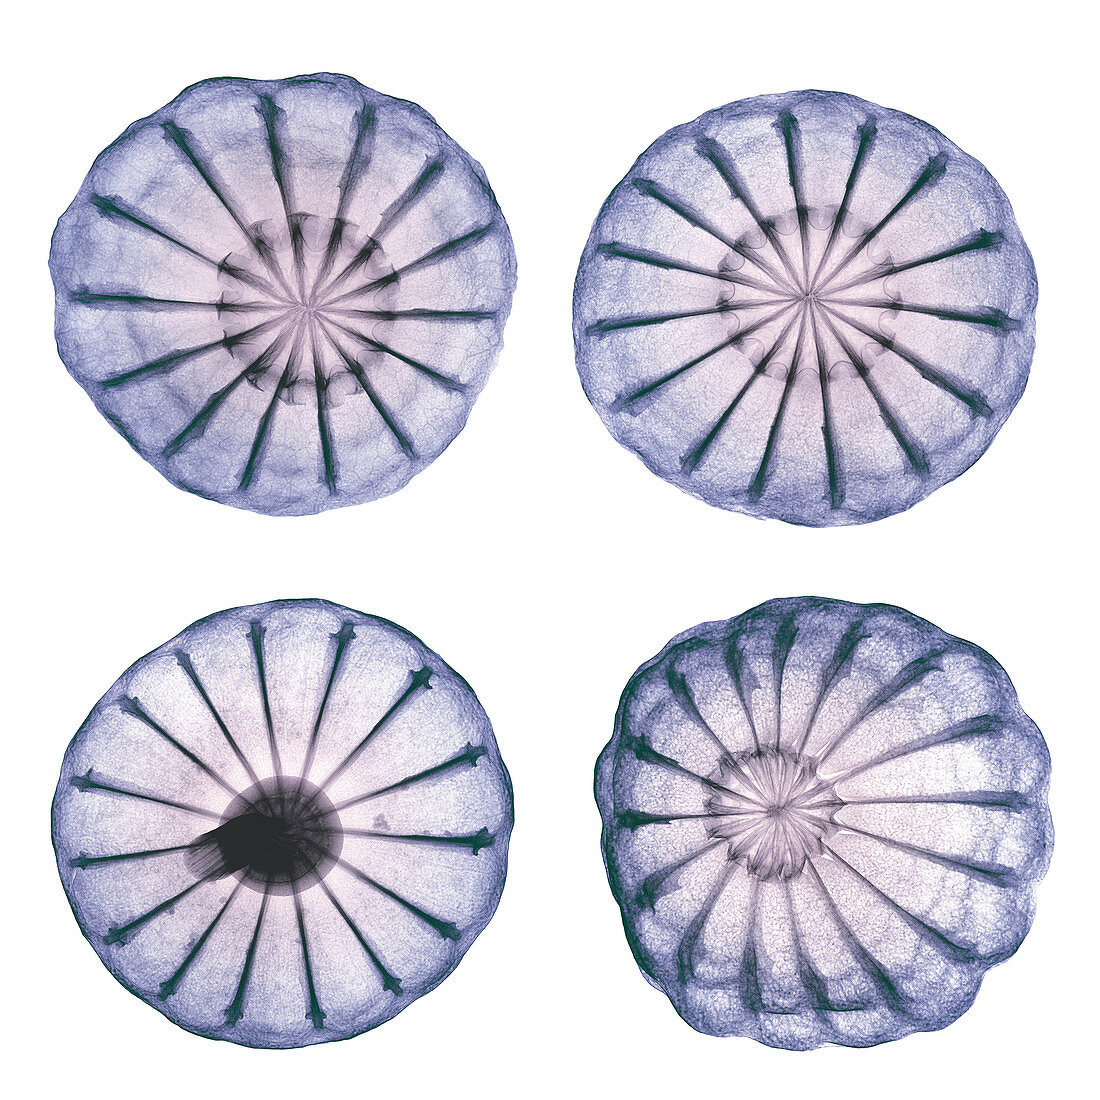 Opium Poppy Pods, X-ray